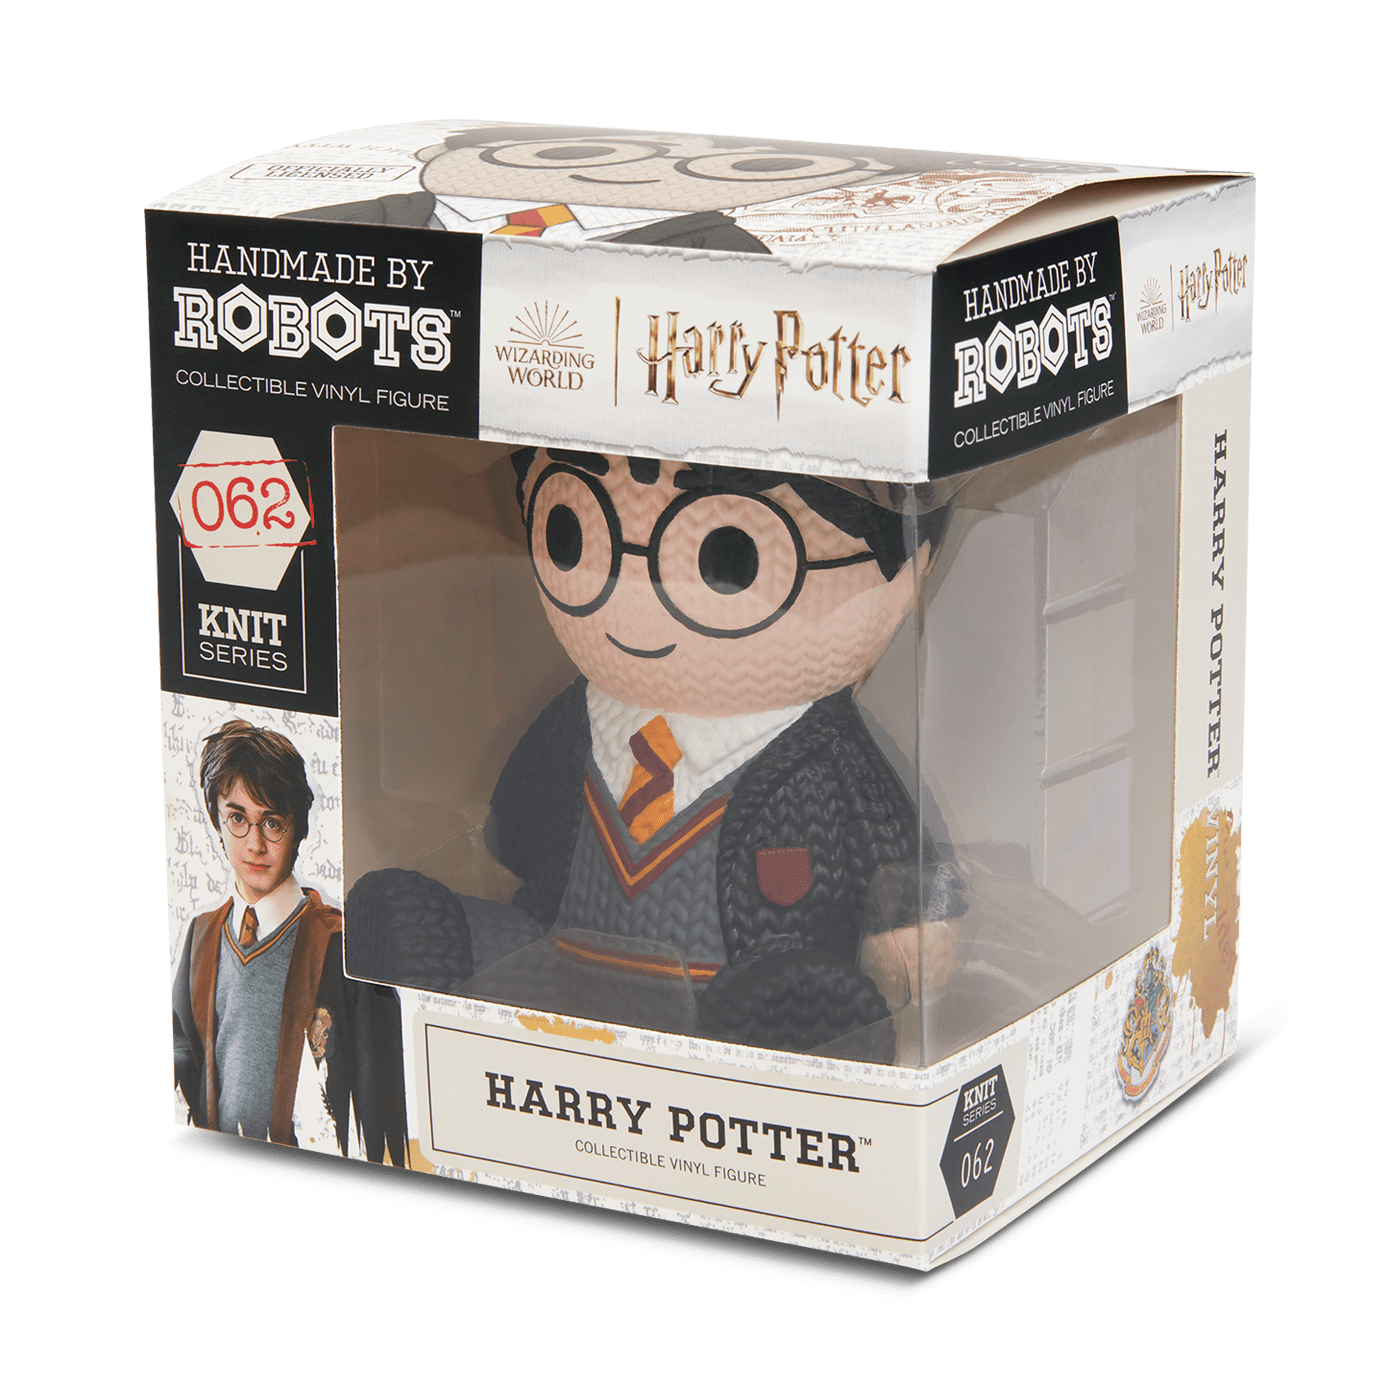 Harry Potter #062 - Harry Potter - Handmade by Robots